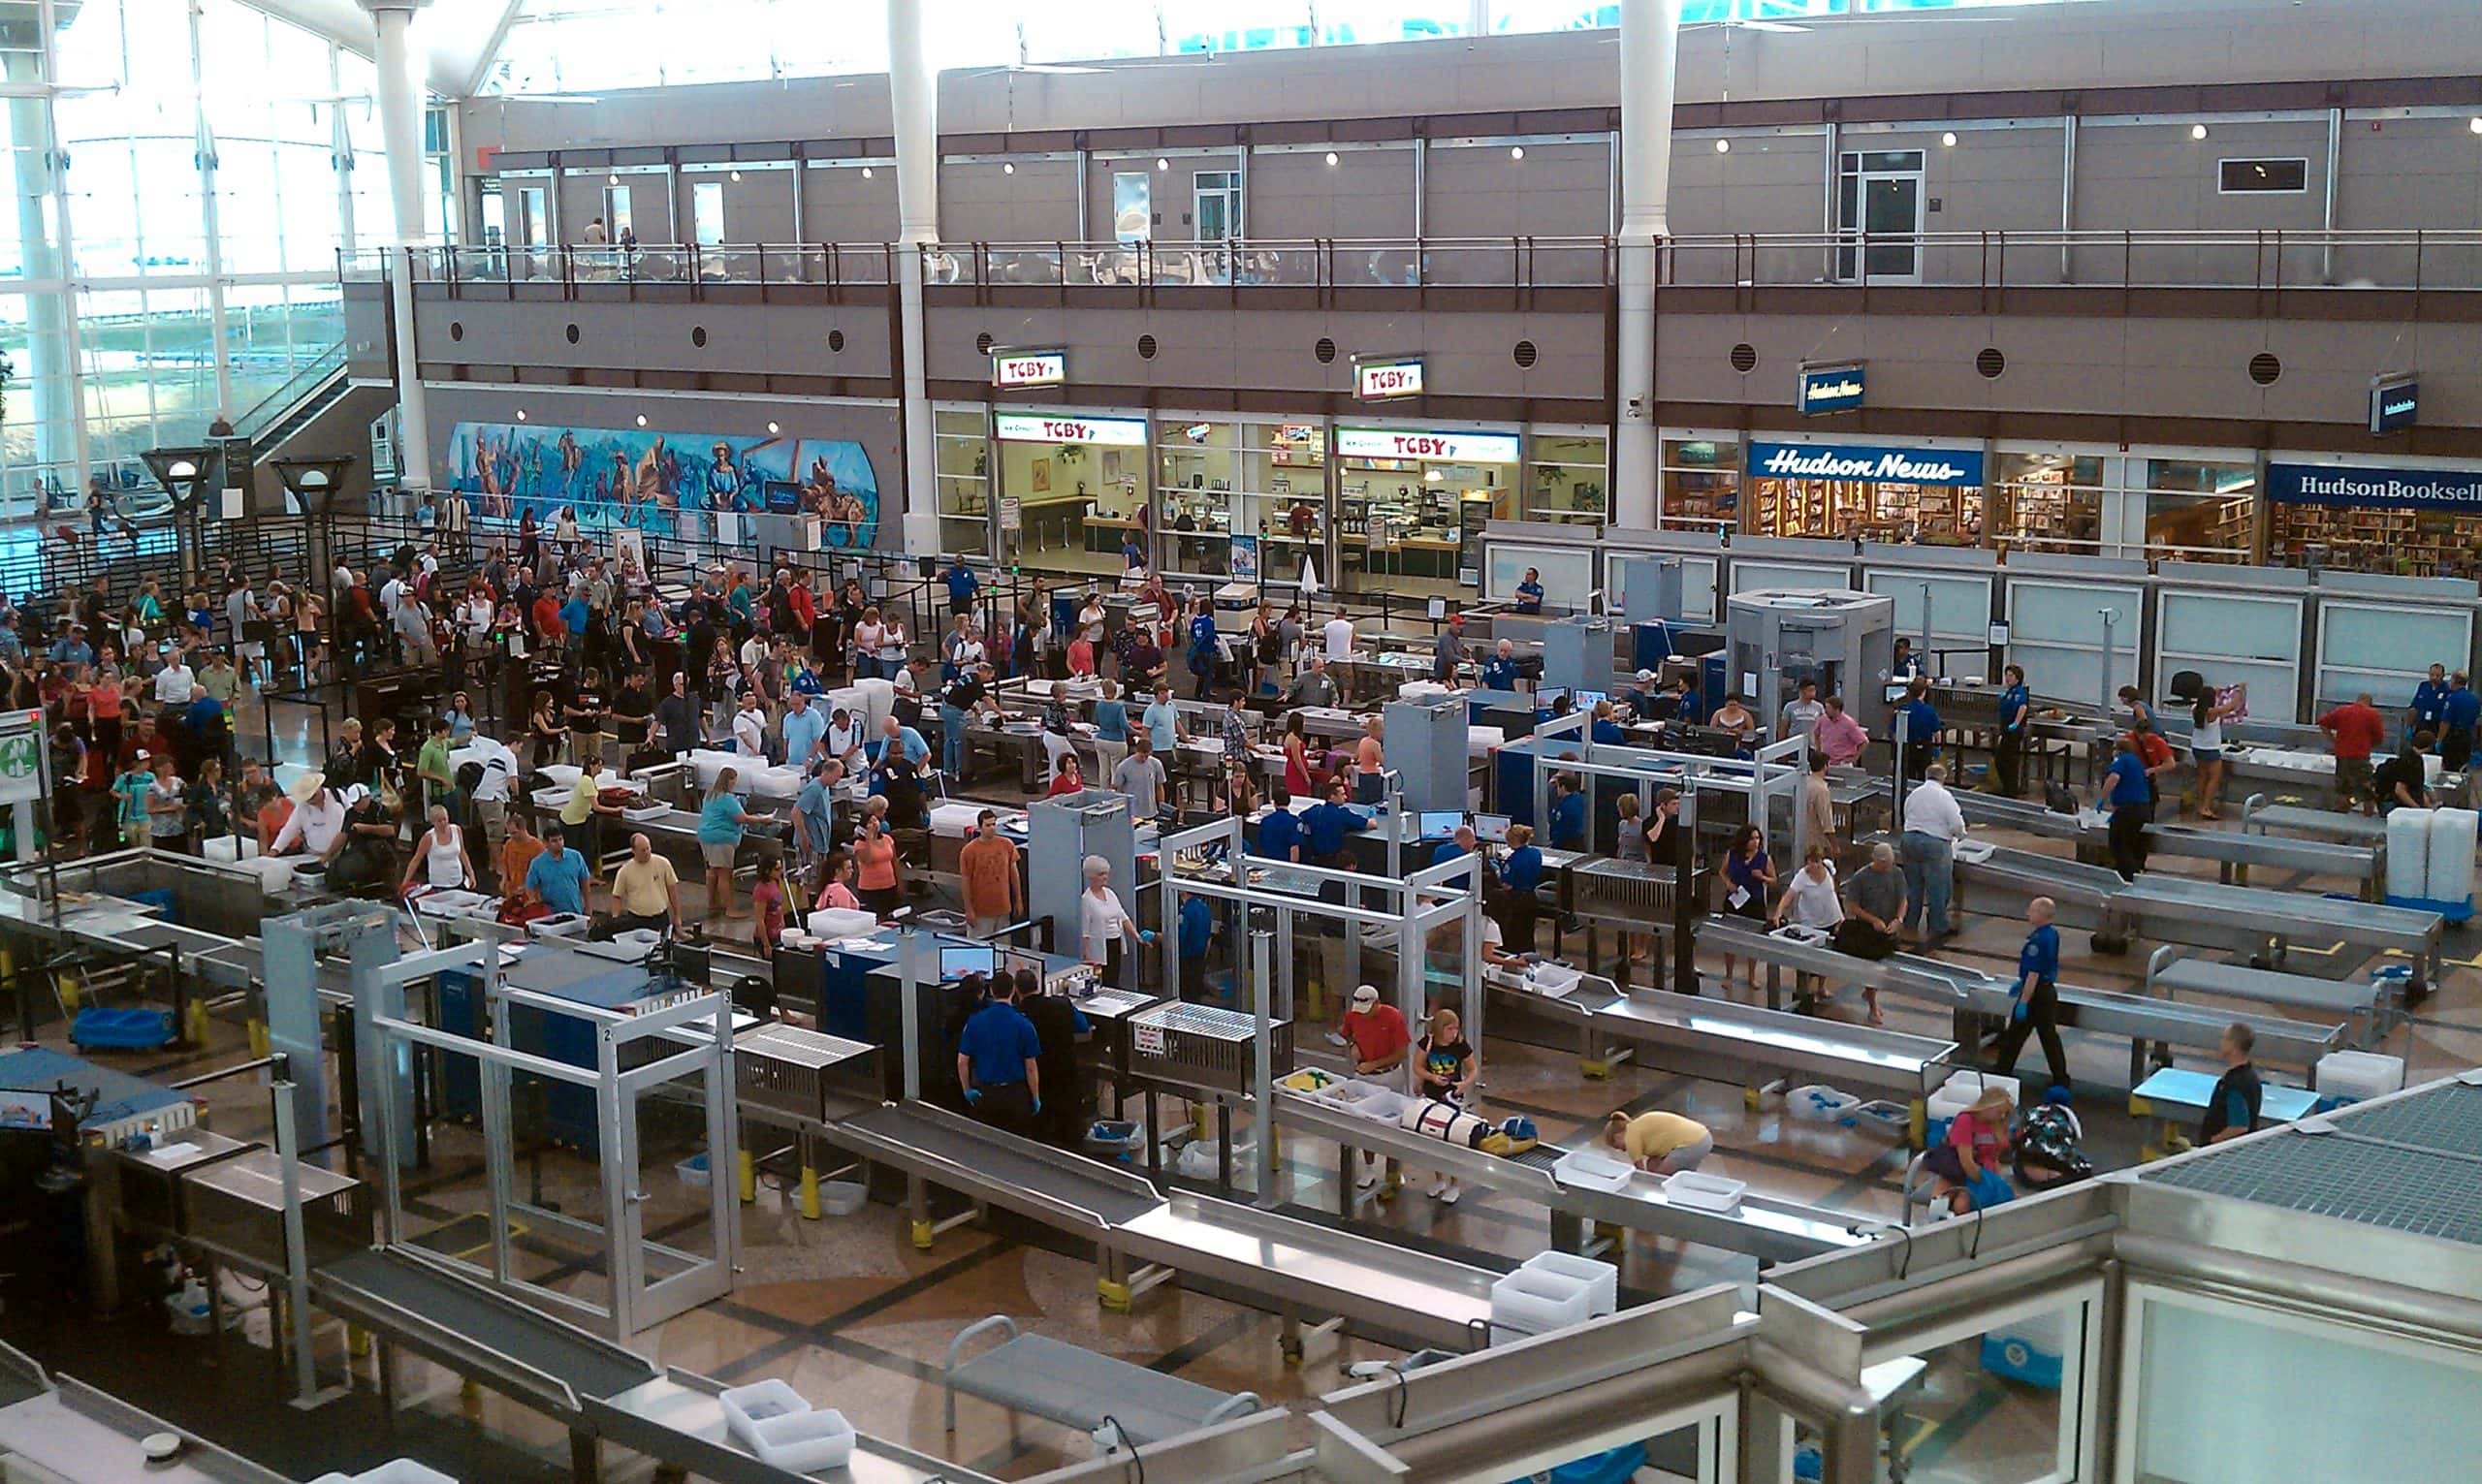 TSA security line at Denver Airport. Image: Quinn Dombrowski via Flickr